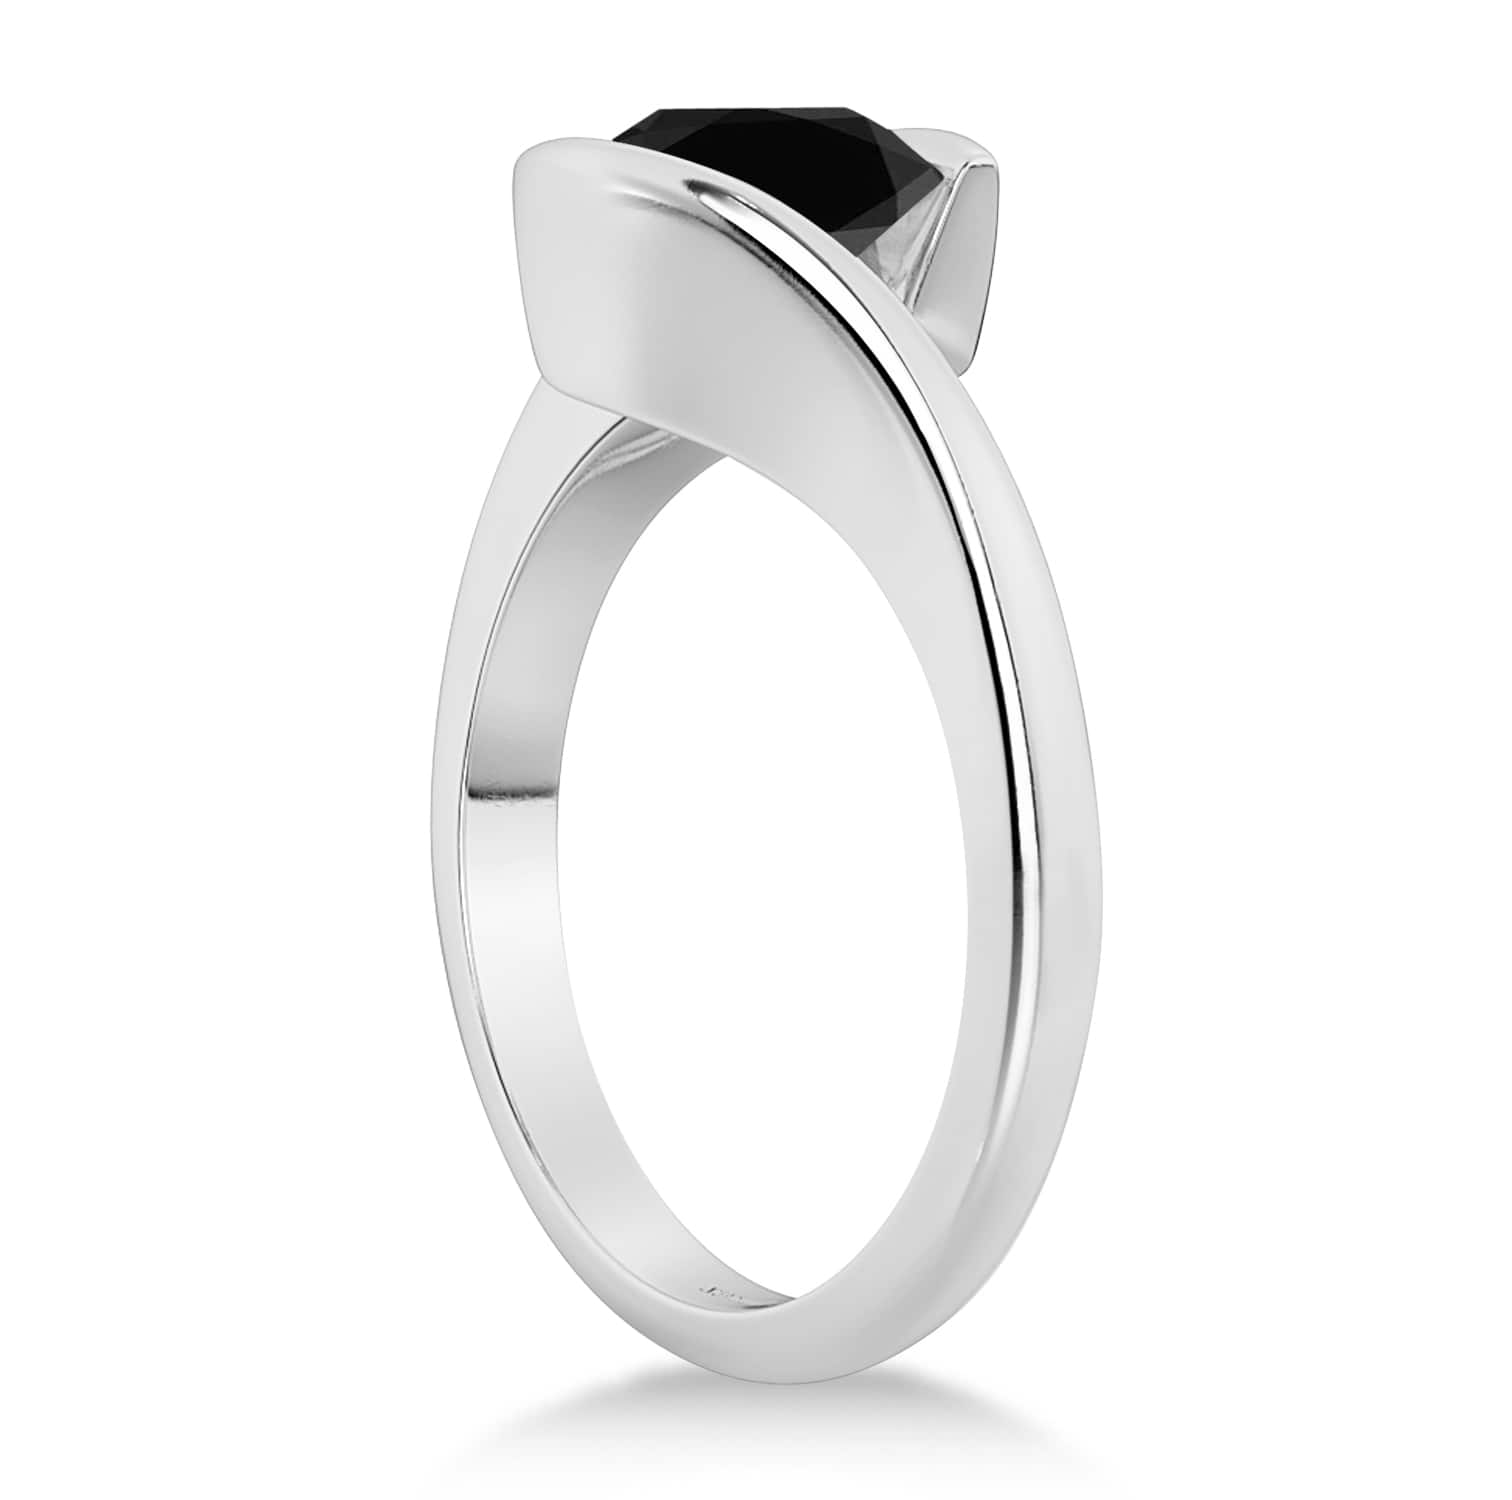 Tension Set Solitaire Black Diamond Engagement Ring in Palladium 1.25ct